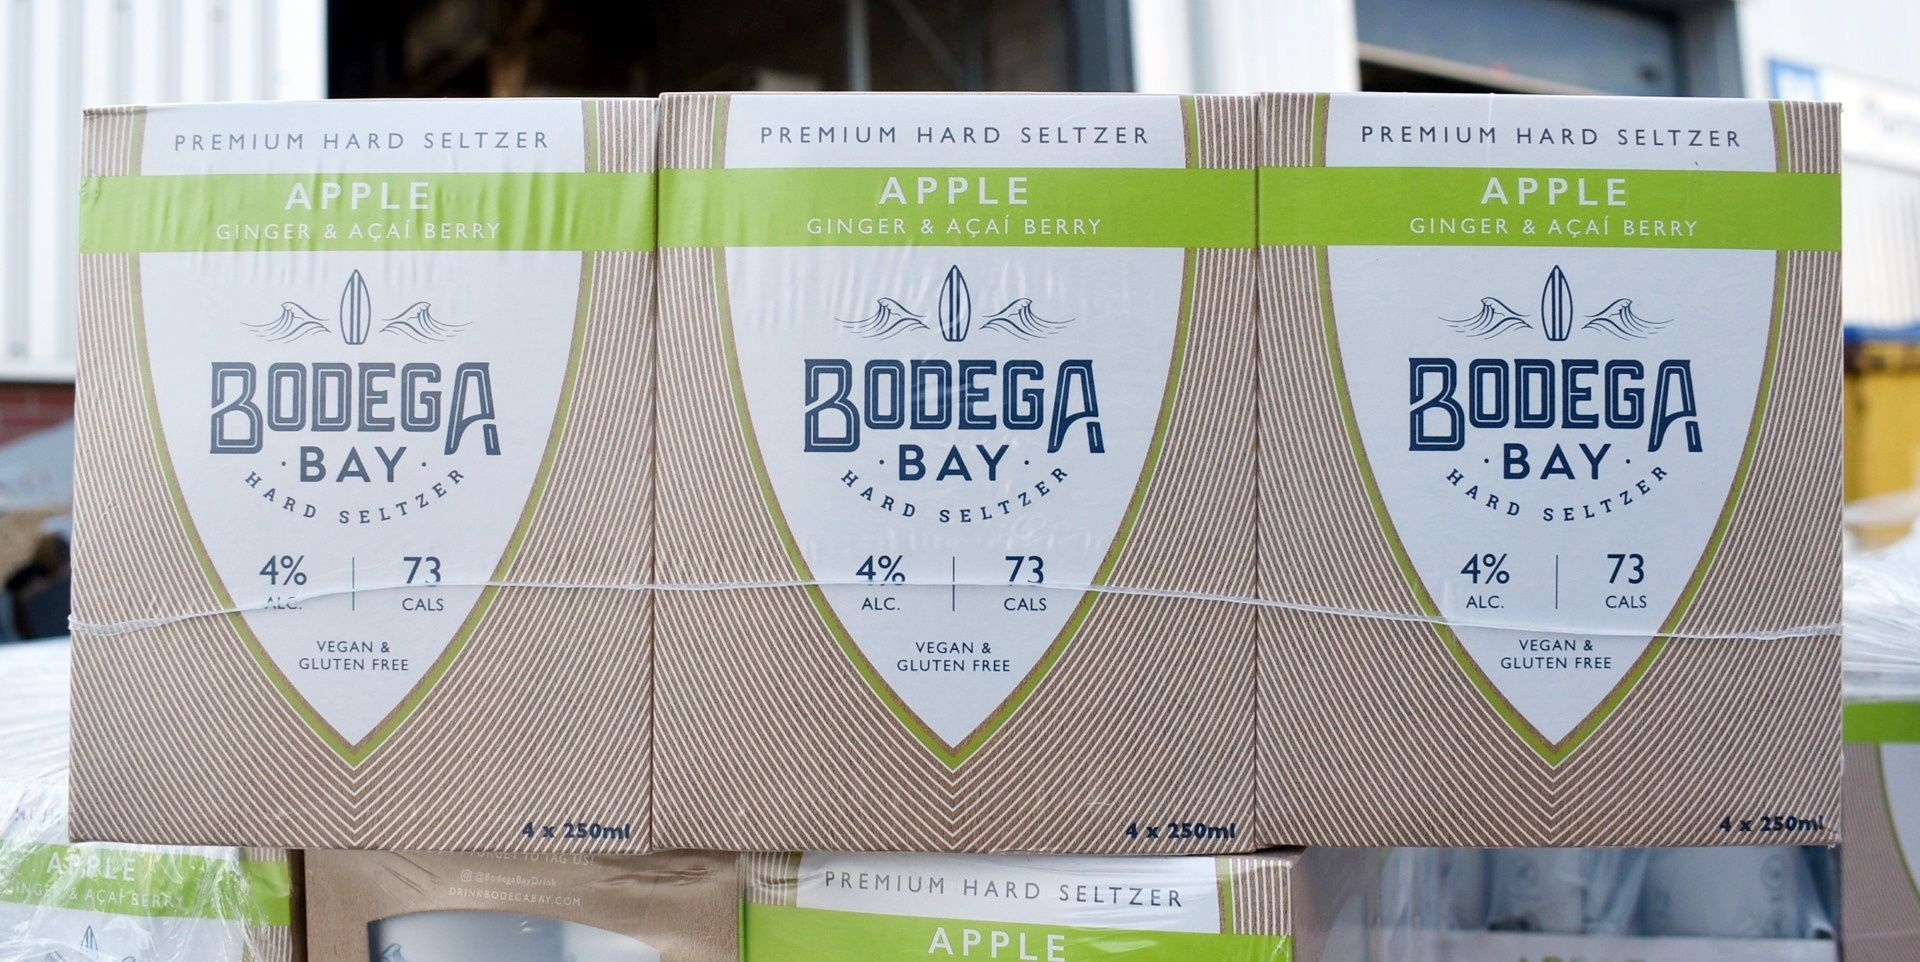 24 x Bodega Bay Hard Seltzer 250ml Alcoholic Sparkling Water Drinks - Apple Ginger & Acai Berry - Image 4 of 4